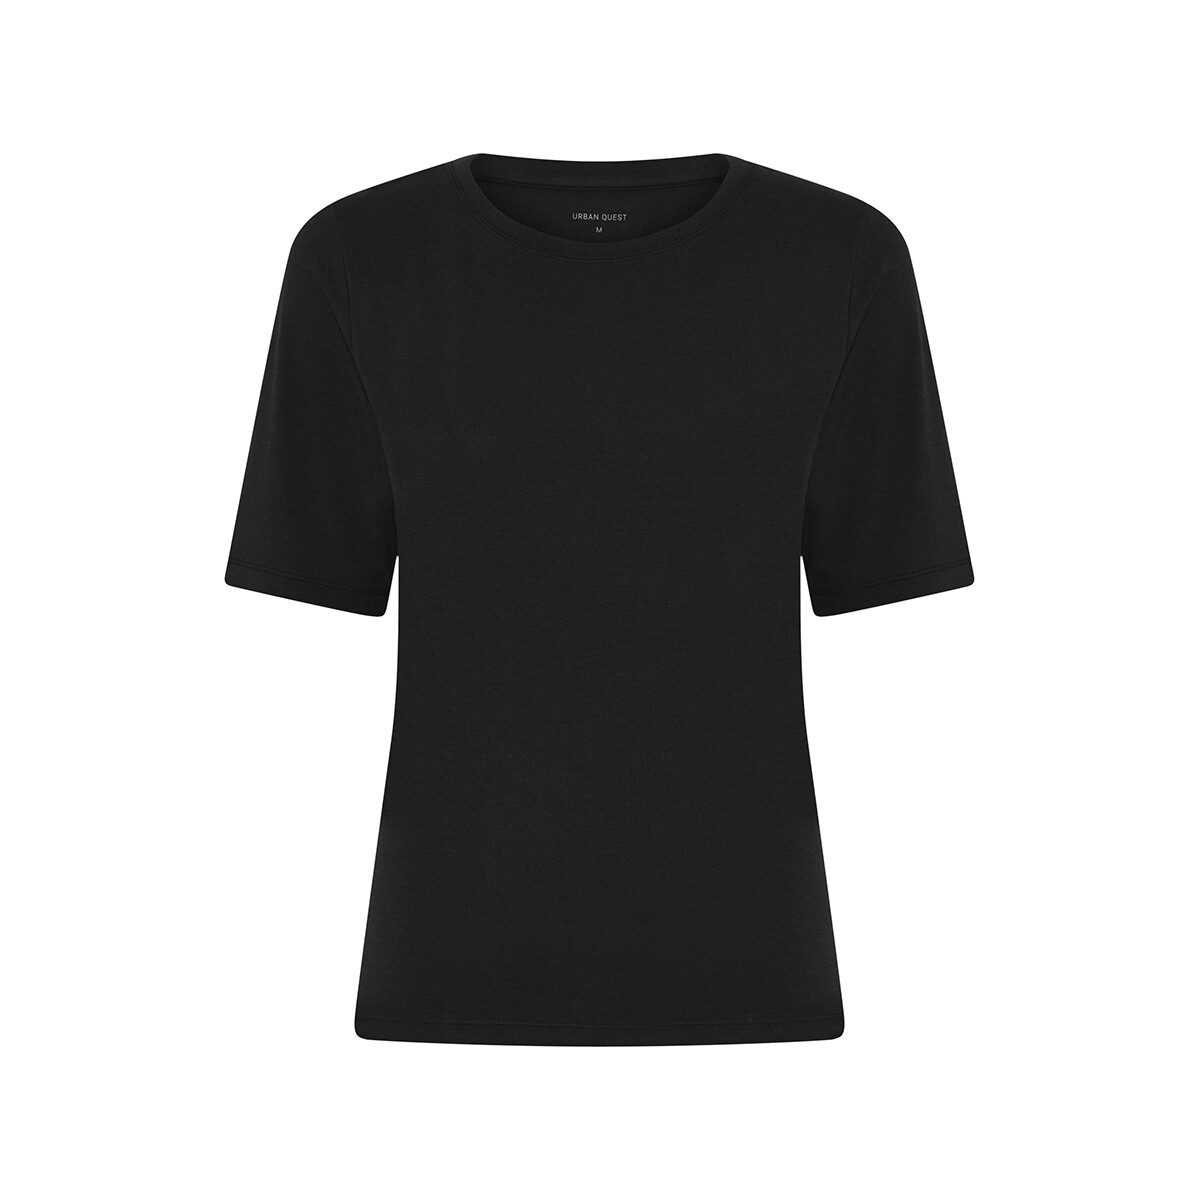 Se Urban Quest Bamboo Slim Fit T-shirt, Farve: Sort, Størrelse: XS, Dame hos Netlingeri.dk